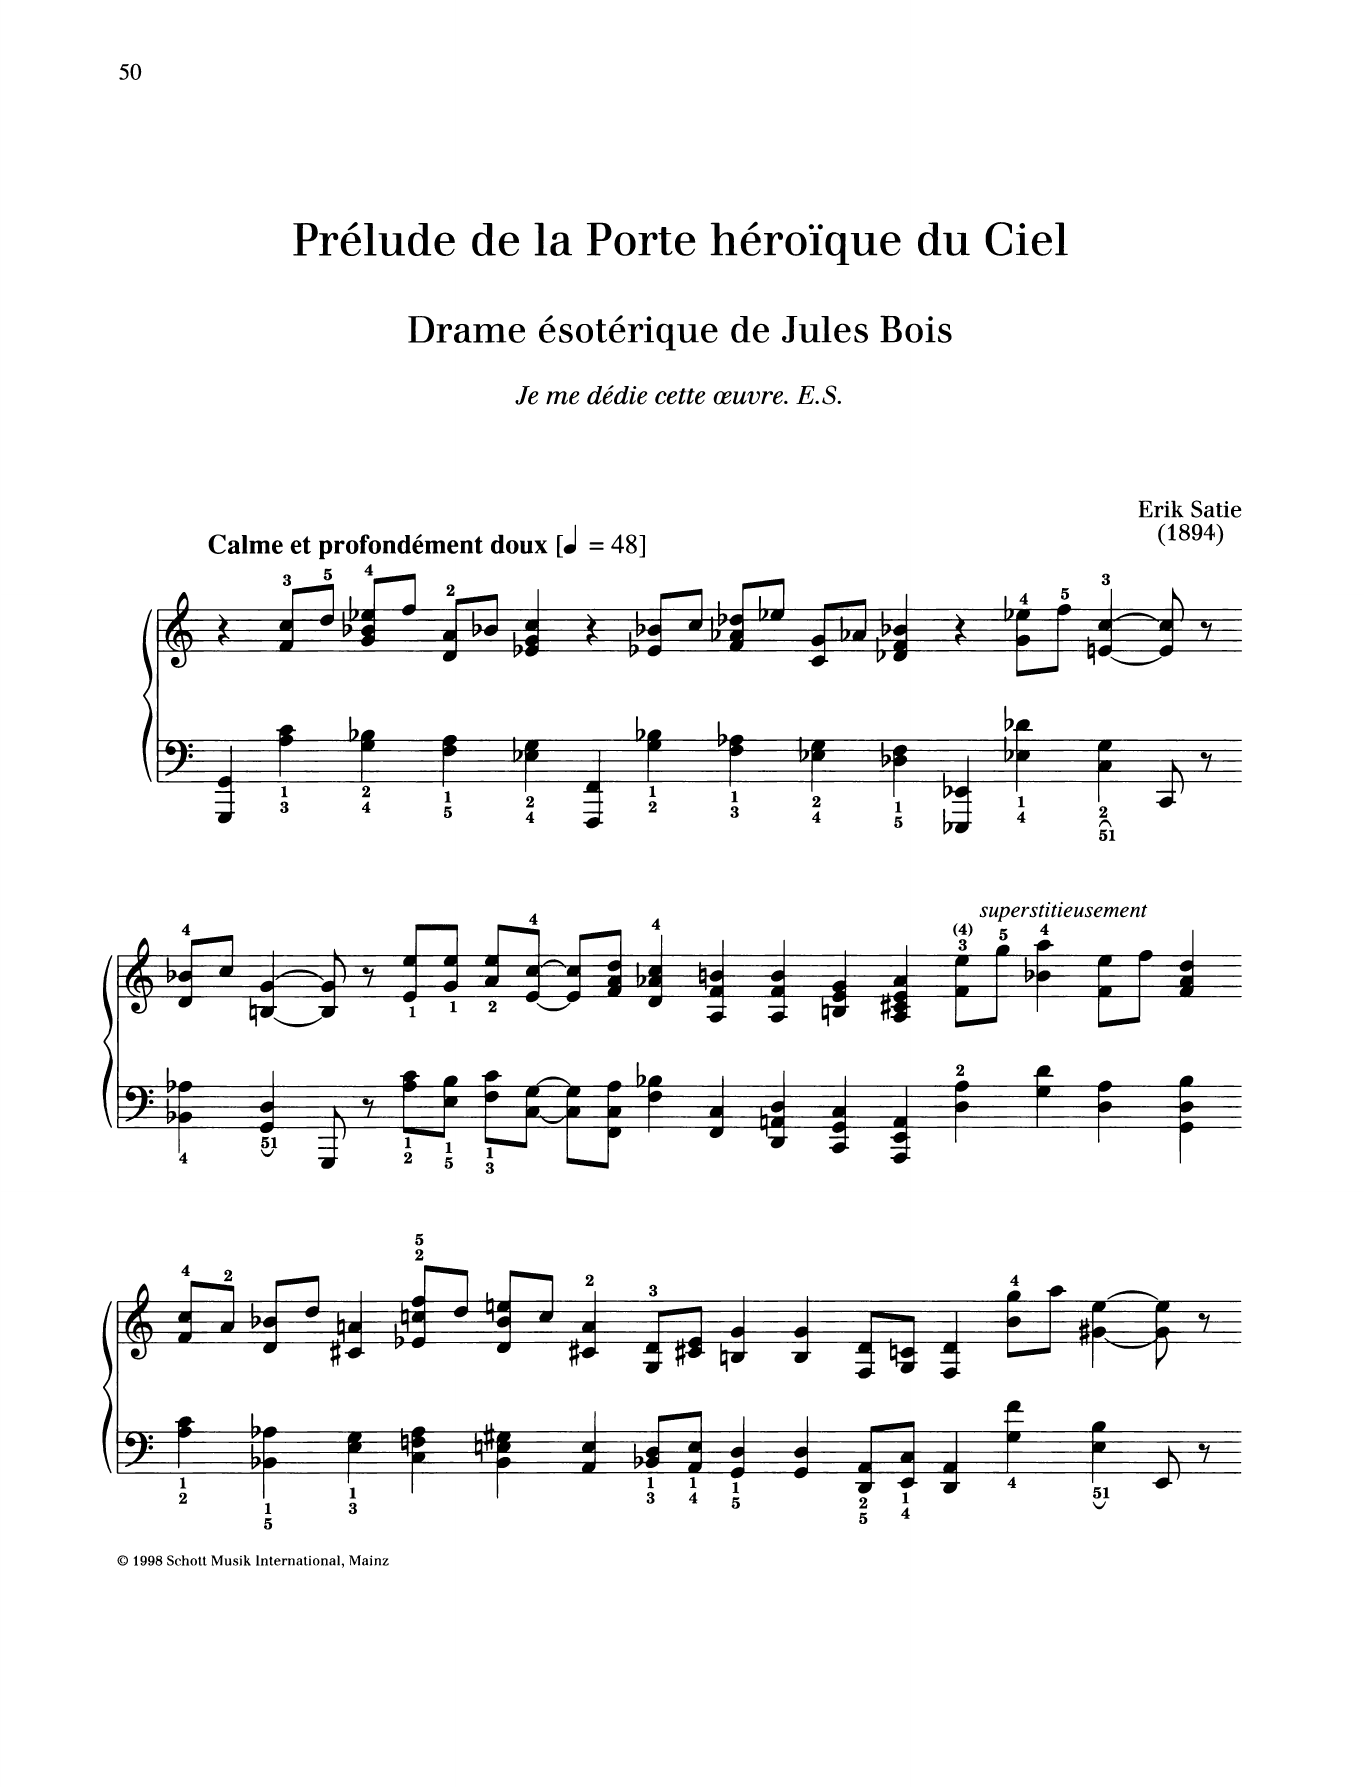 Download Erik Satie Prelude de la Porte heroique du Ciel Sheet Music